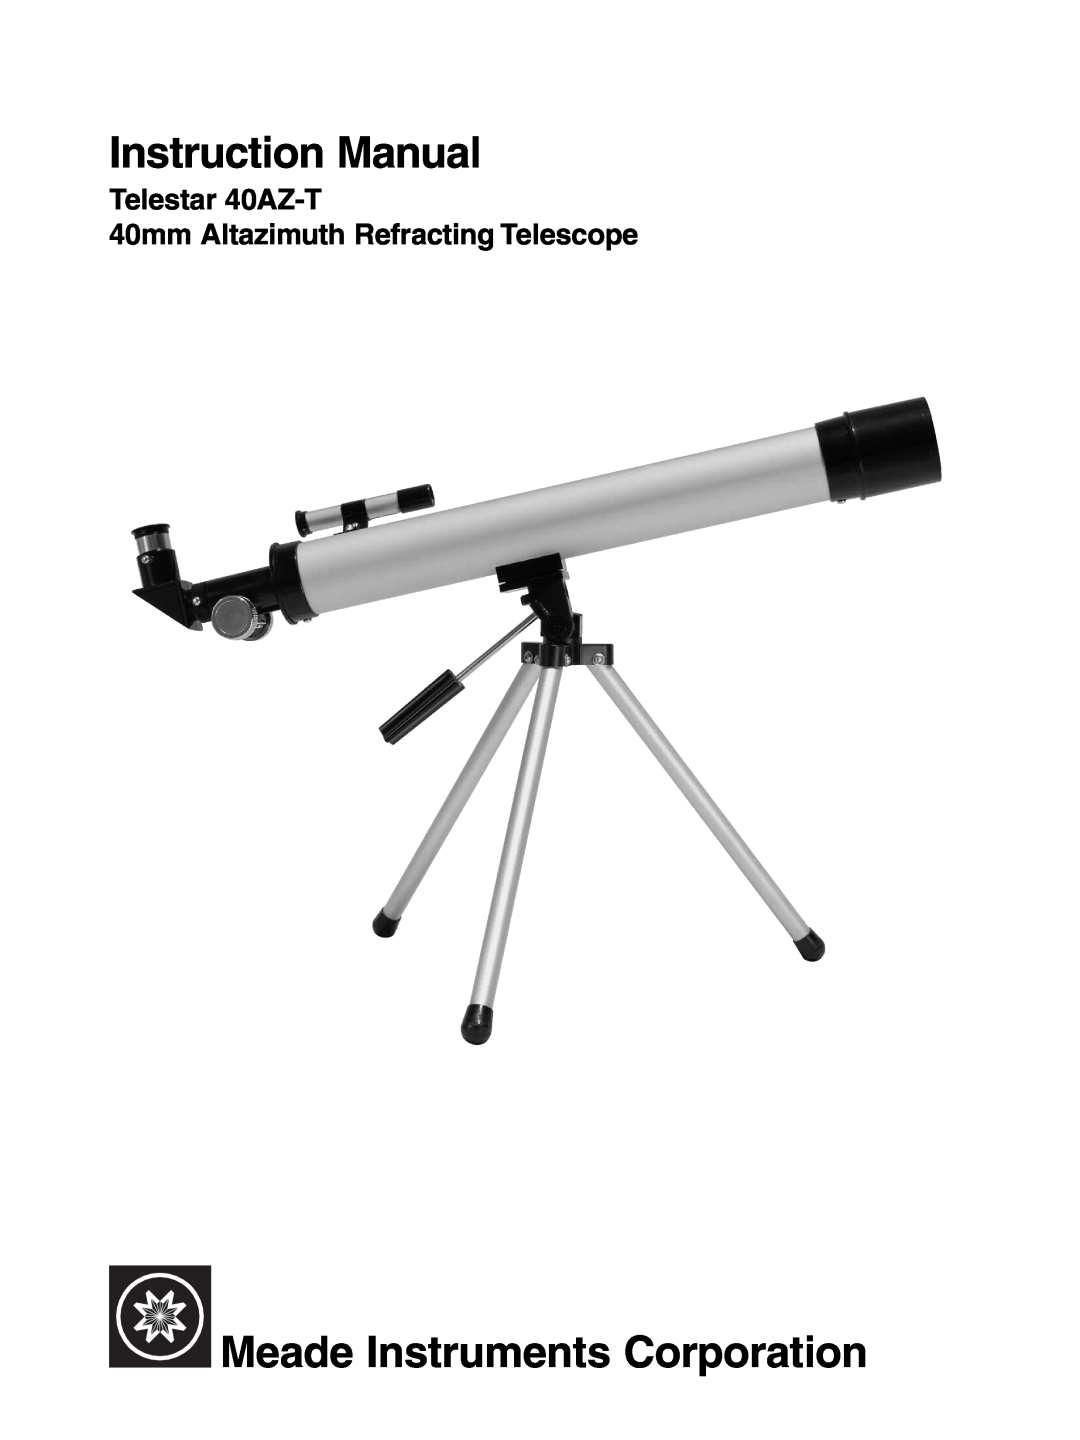 Meade Telestar 40AZ-T instruction manual Meade Instruments Corporation, 40mm Altazimuth Refracting Telescope 